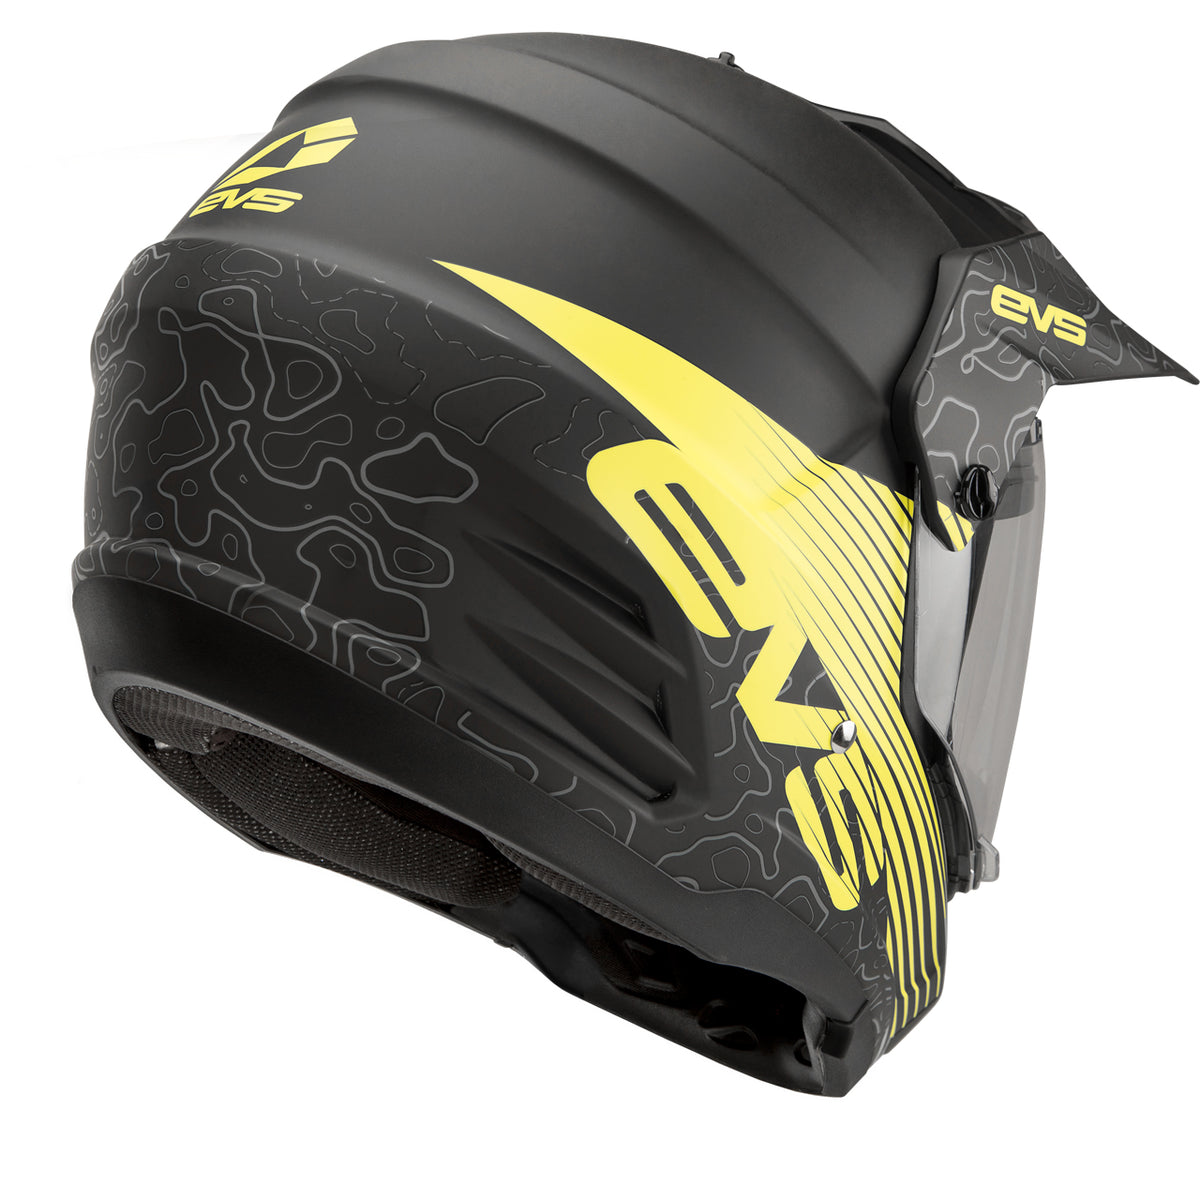 T5 Dual Sport Helmet - Venture Arise Black - EVS Sports